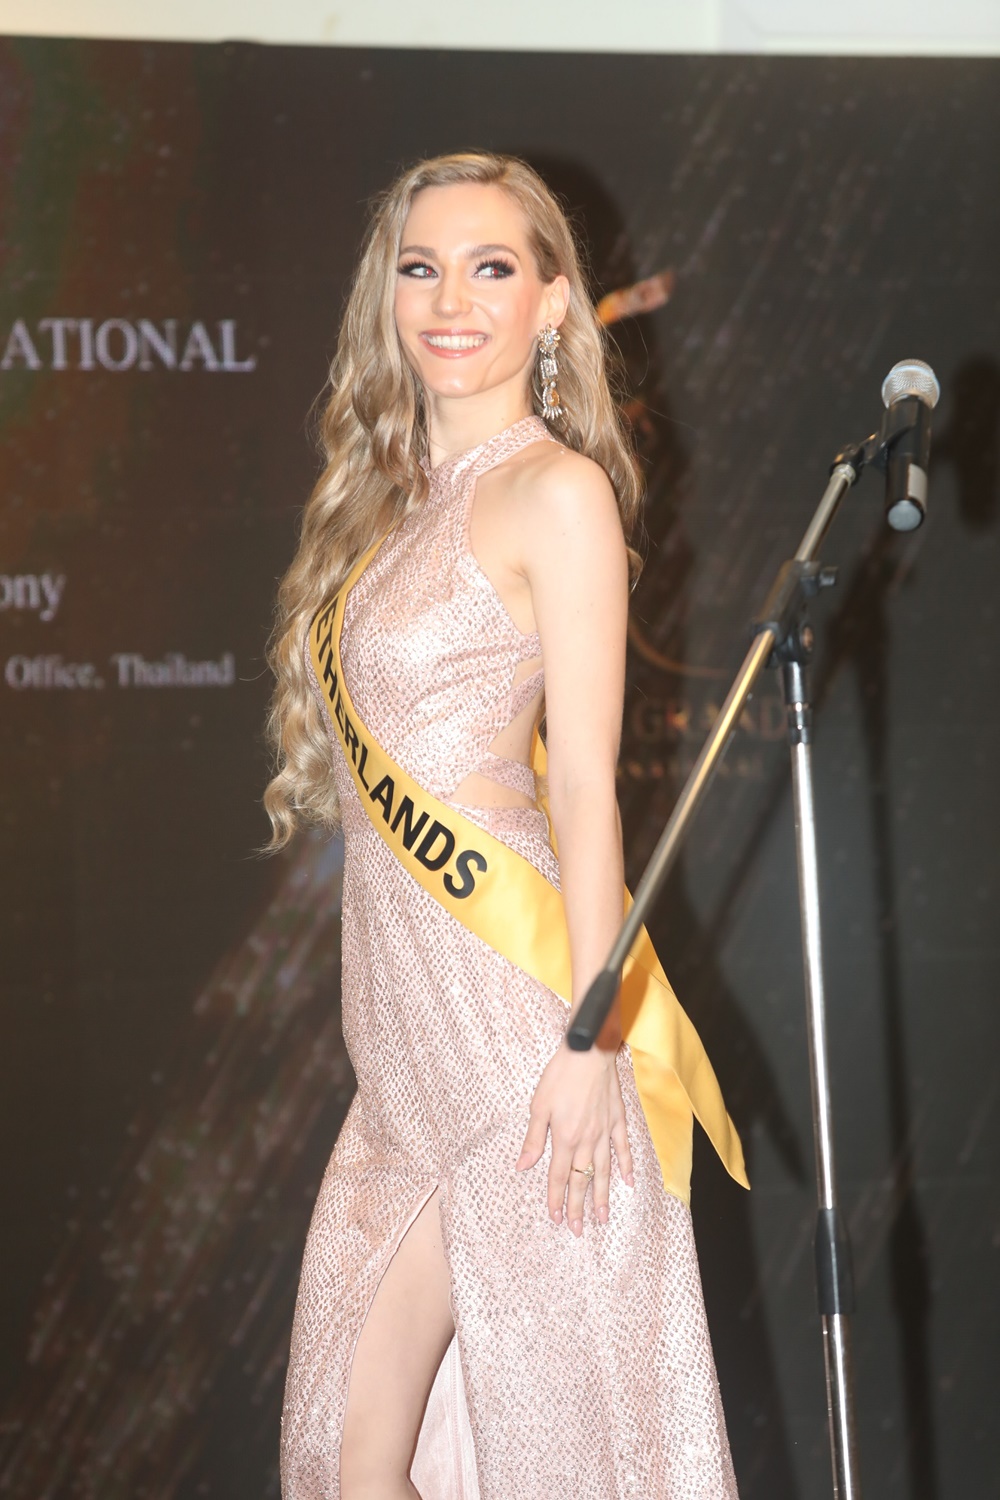 Miss Grand International 2020